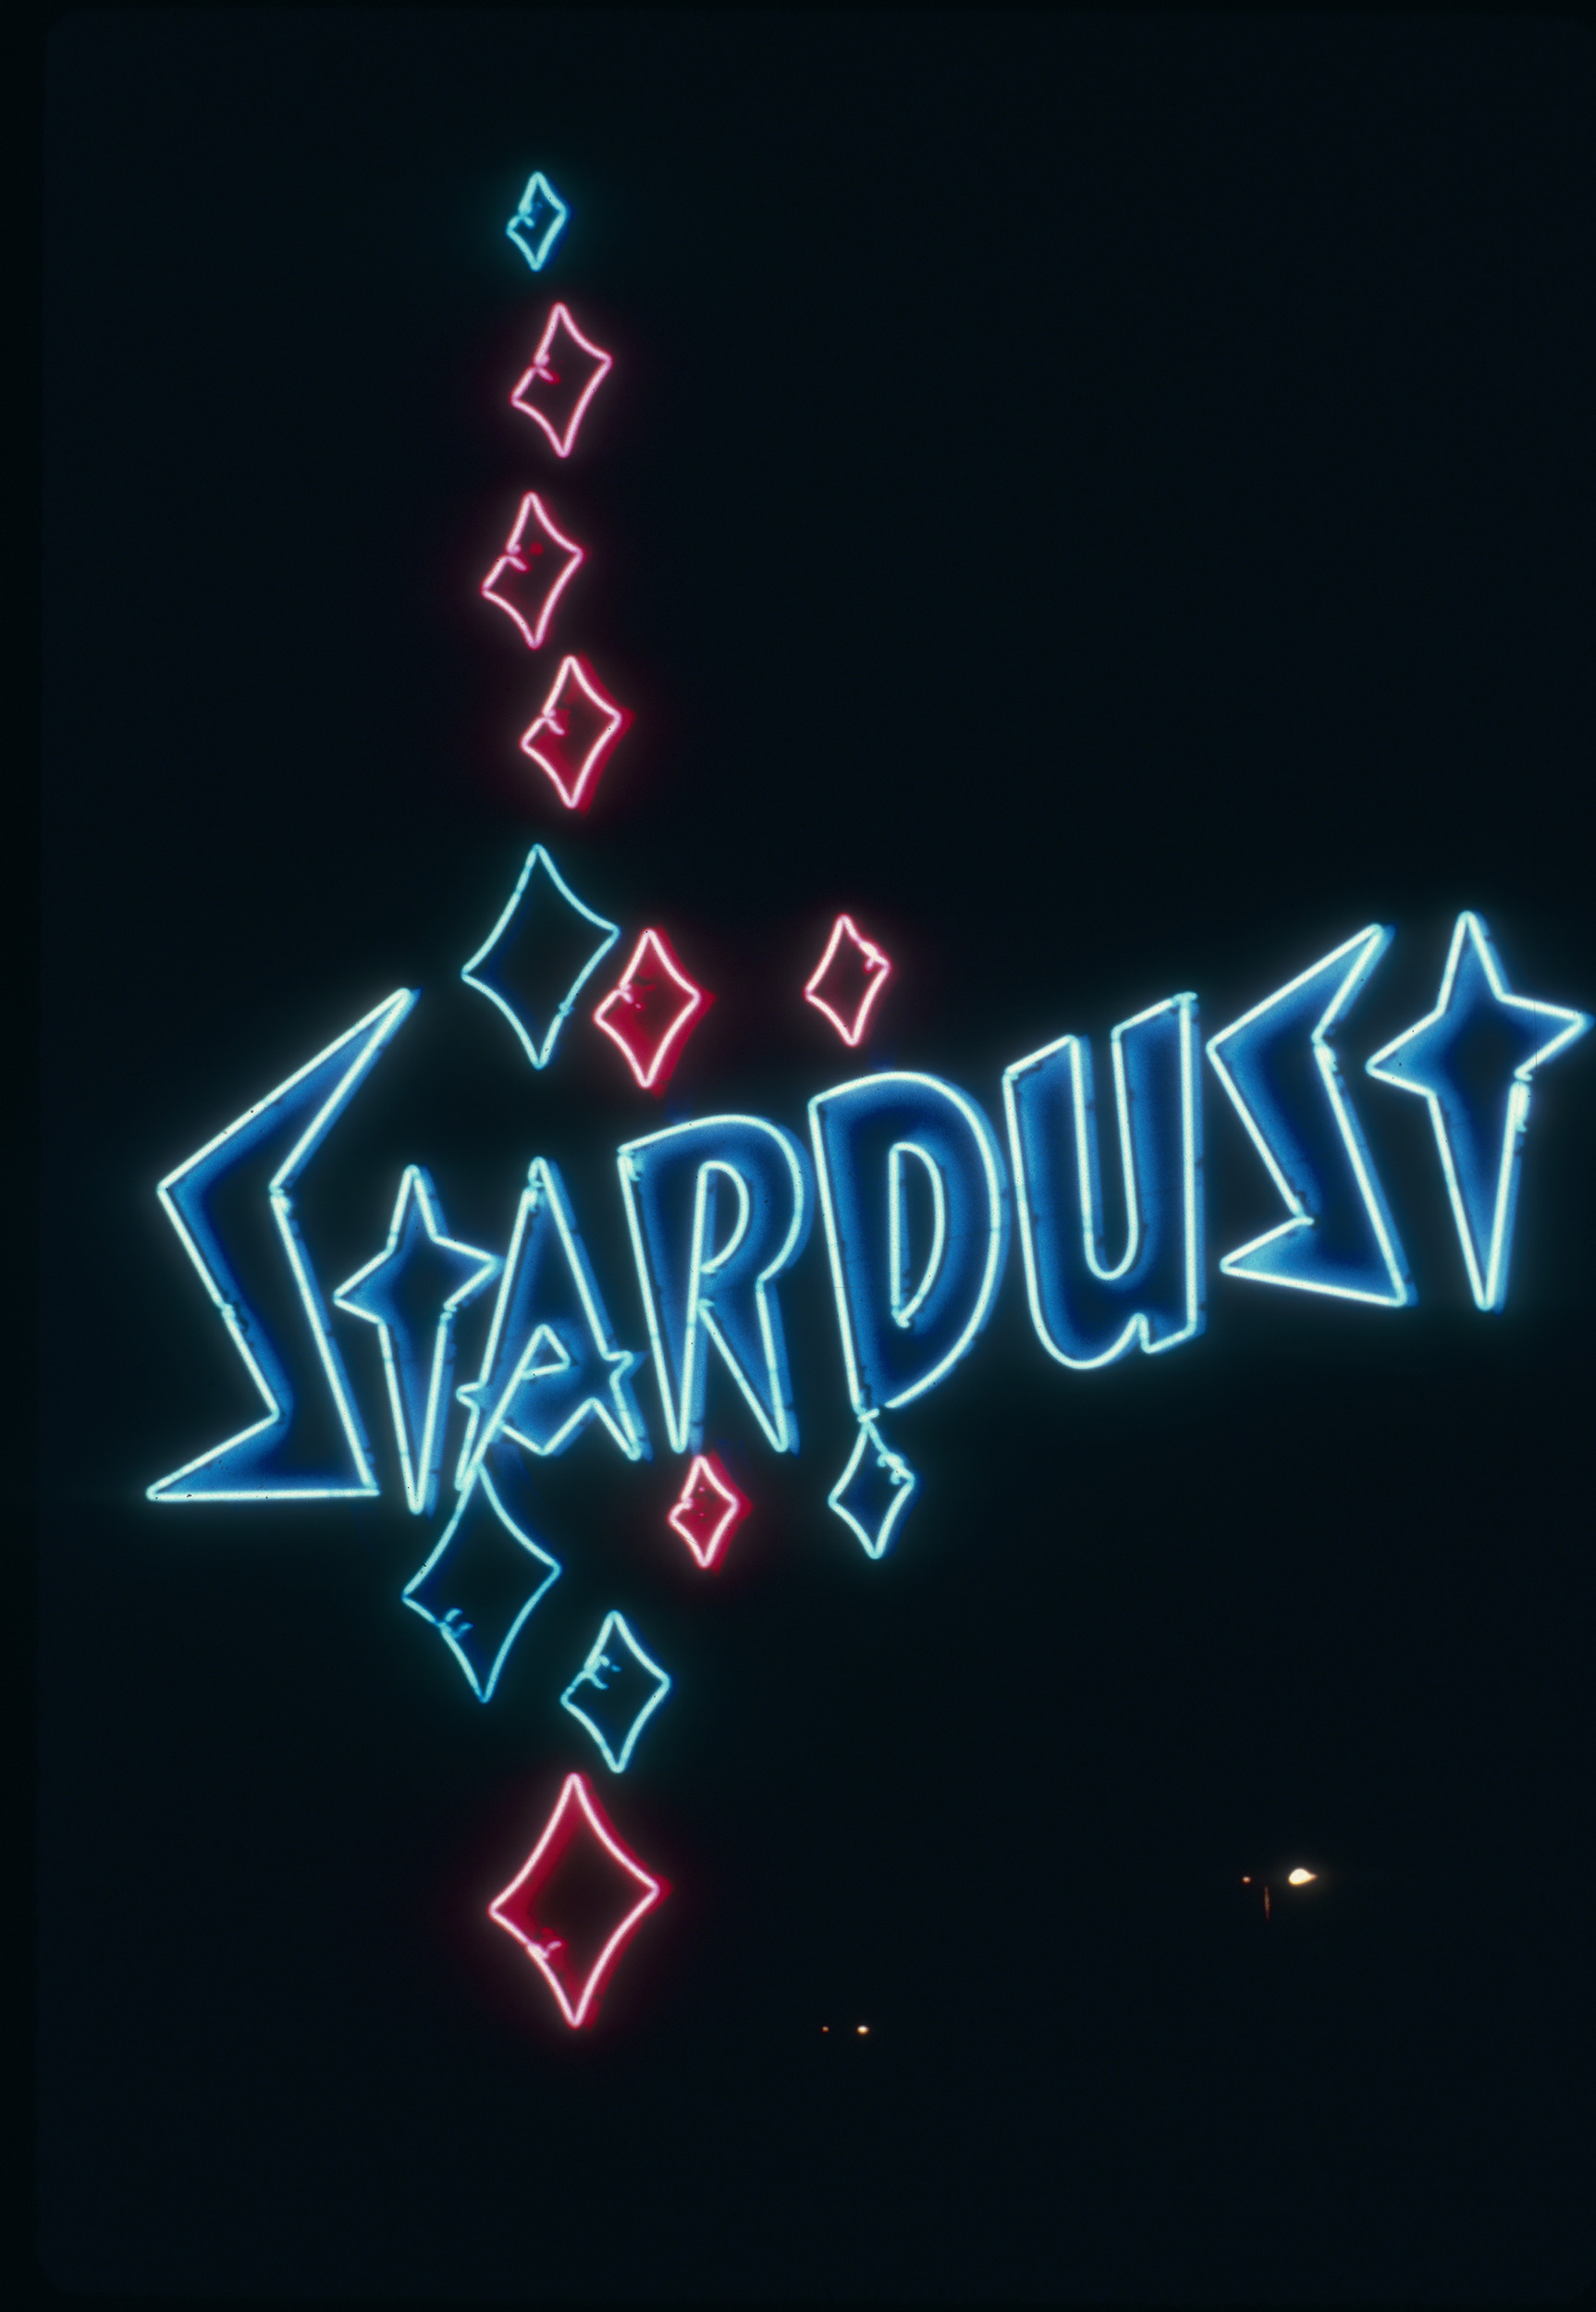 Slide of a neon Stardust marquee, Las Vegas, circa 1980s